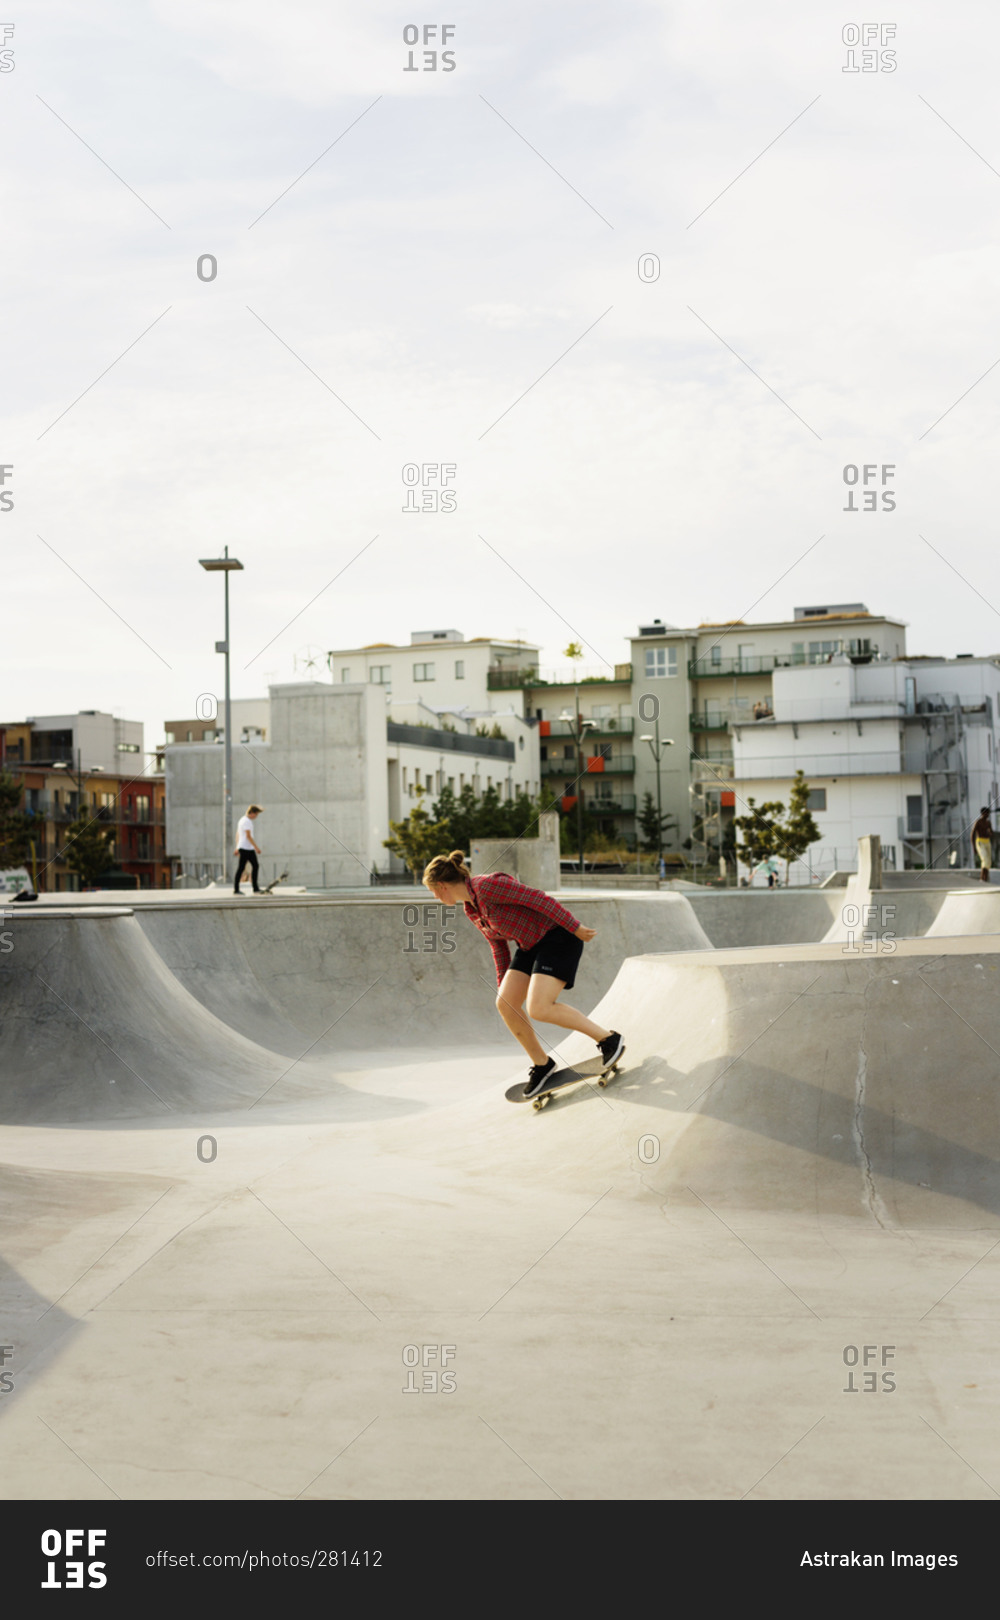 Young woman riding a skateboard at an urban skate park